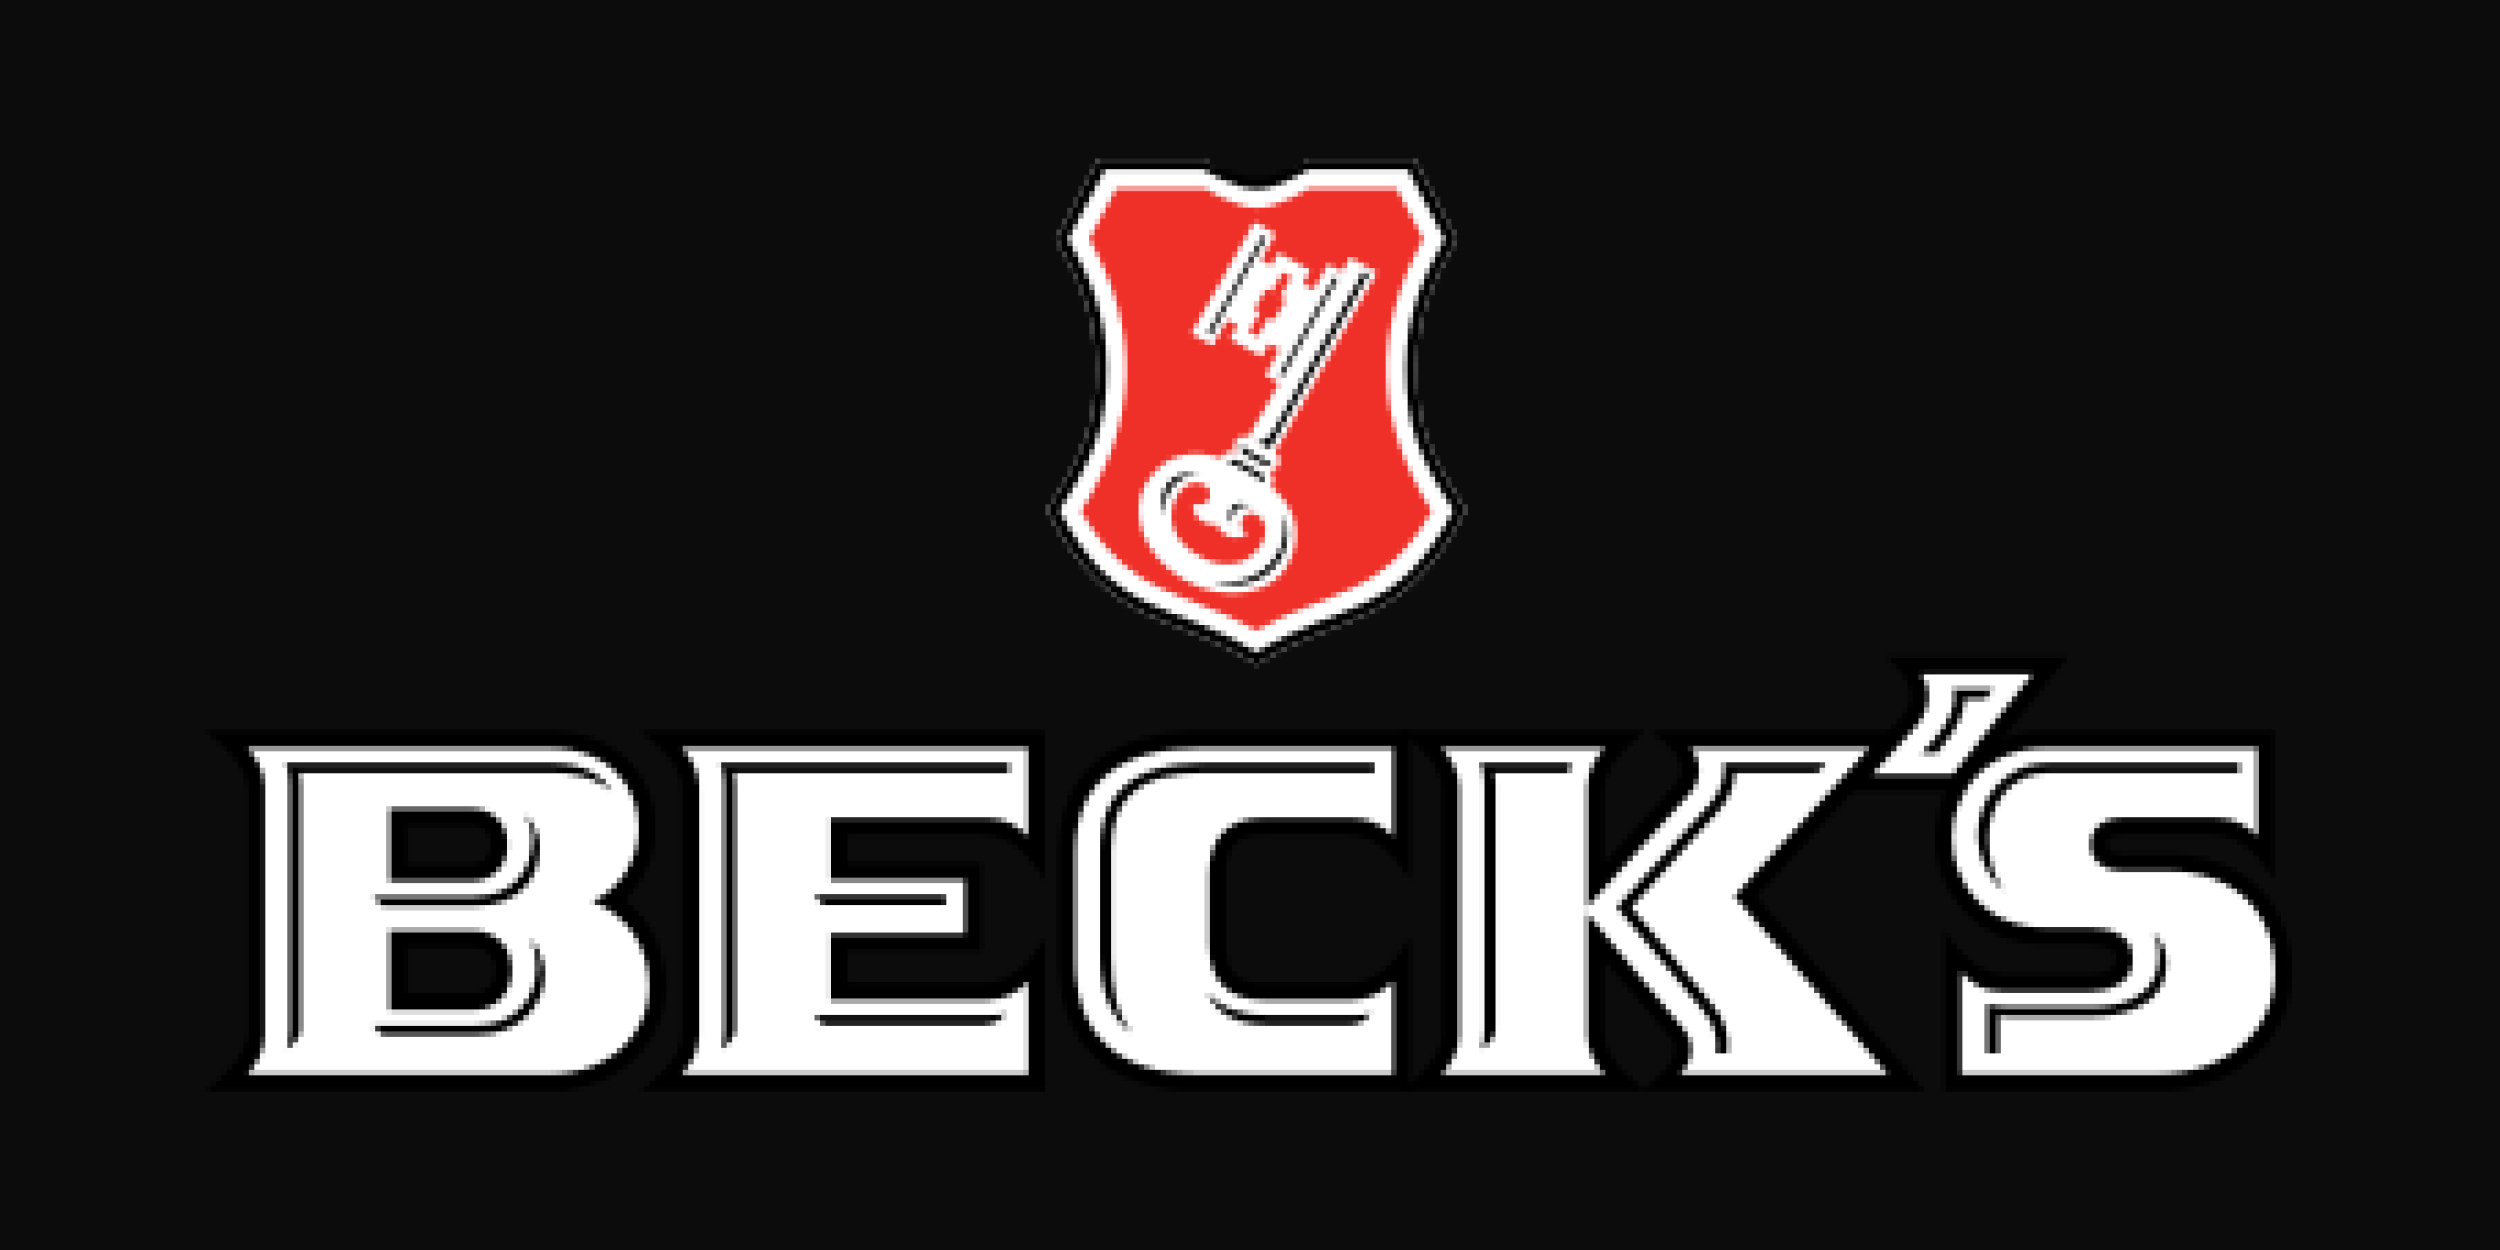 Referenz Beck’s Bier Werbung Social Media Team